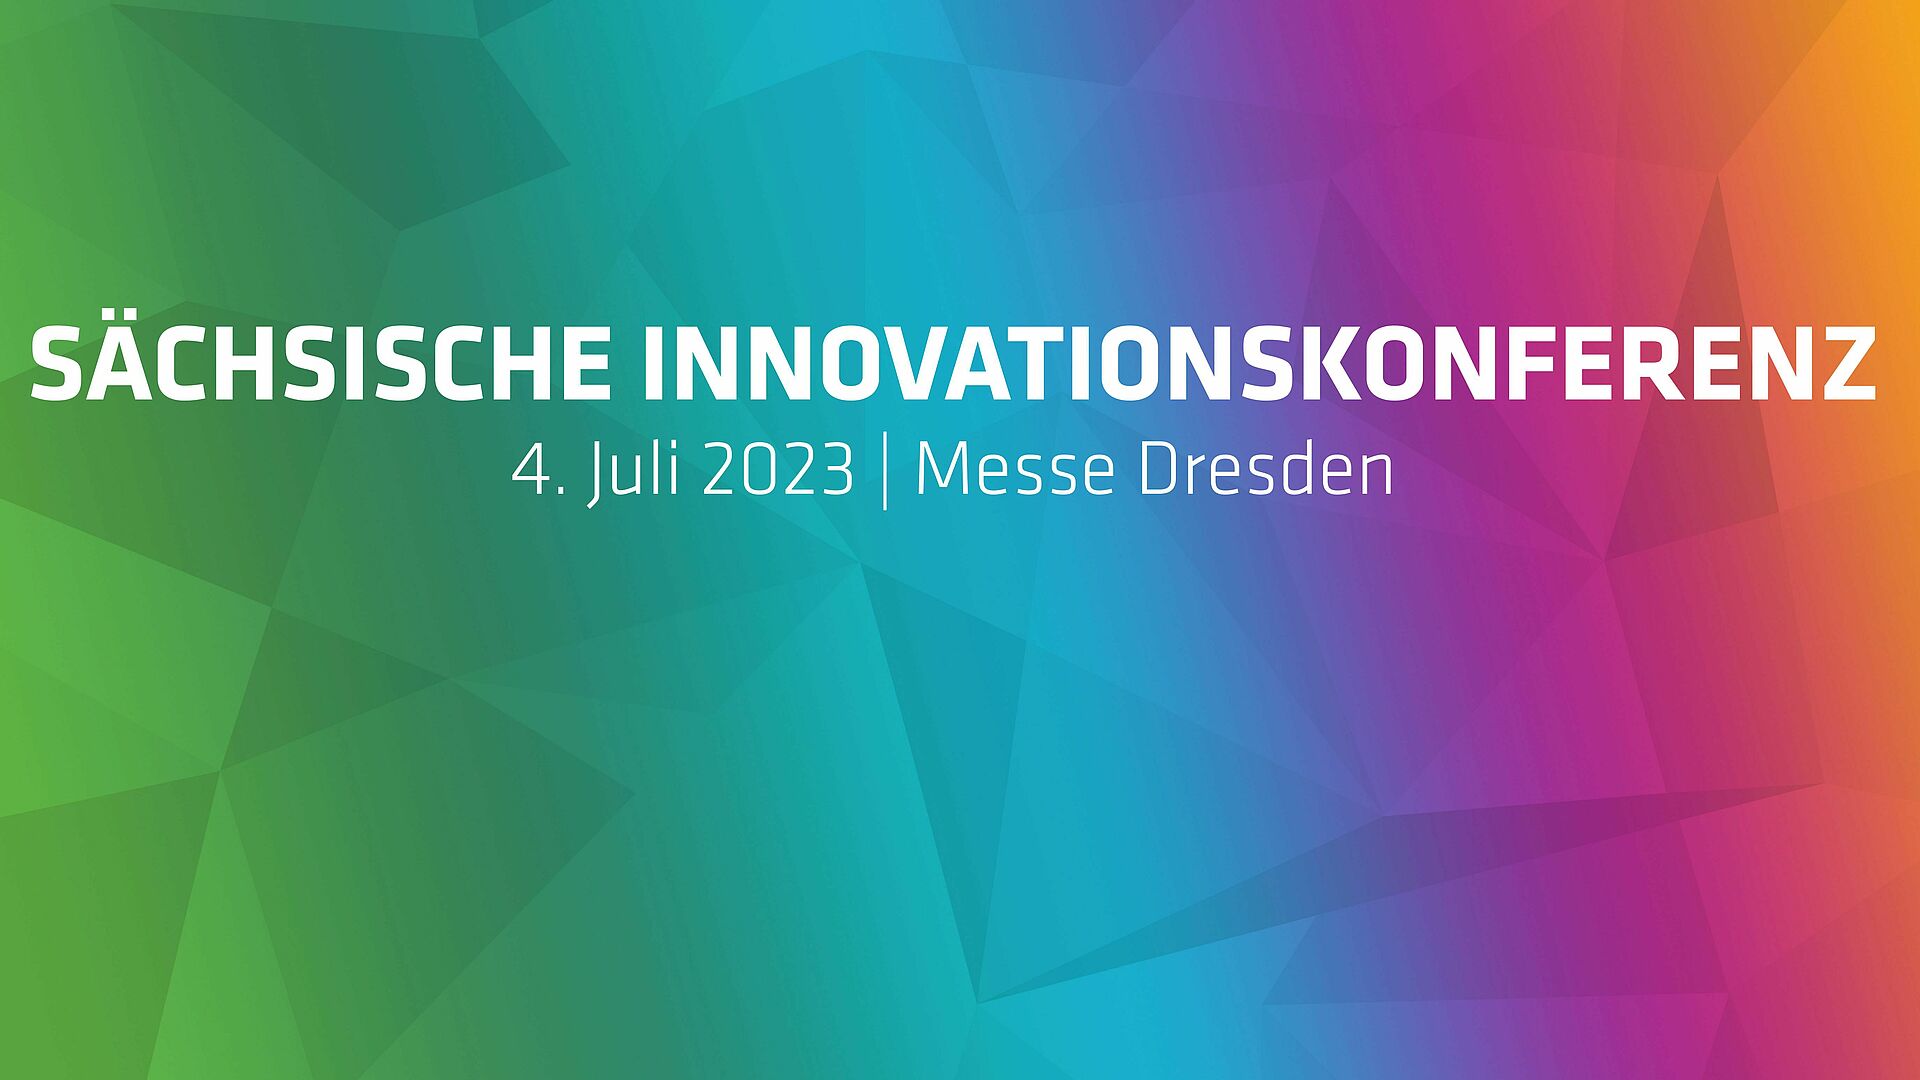 Saxon Innovation Conference I 04 July 2023 I Messe Dresden I futureSax